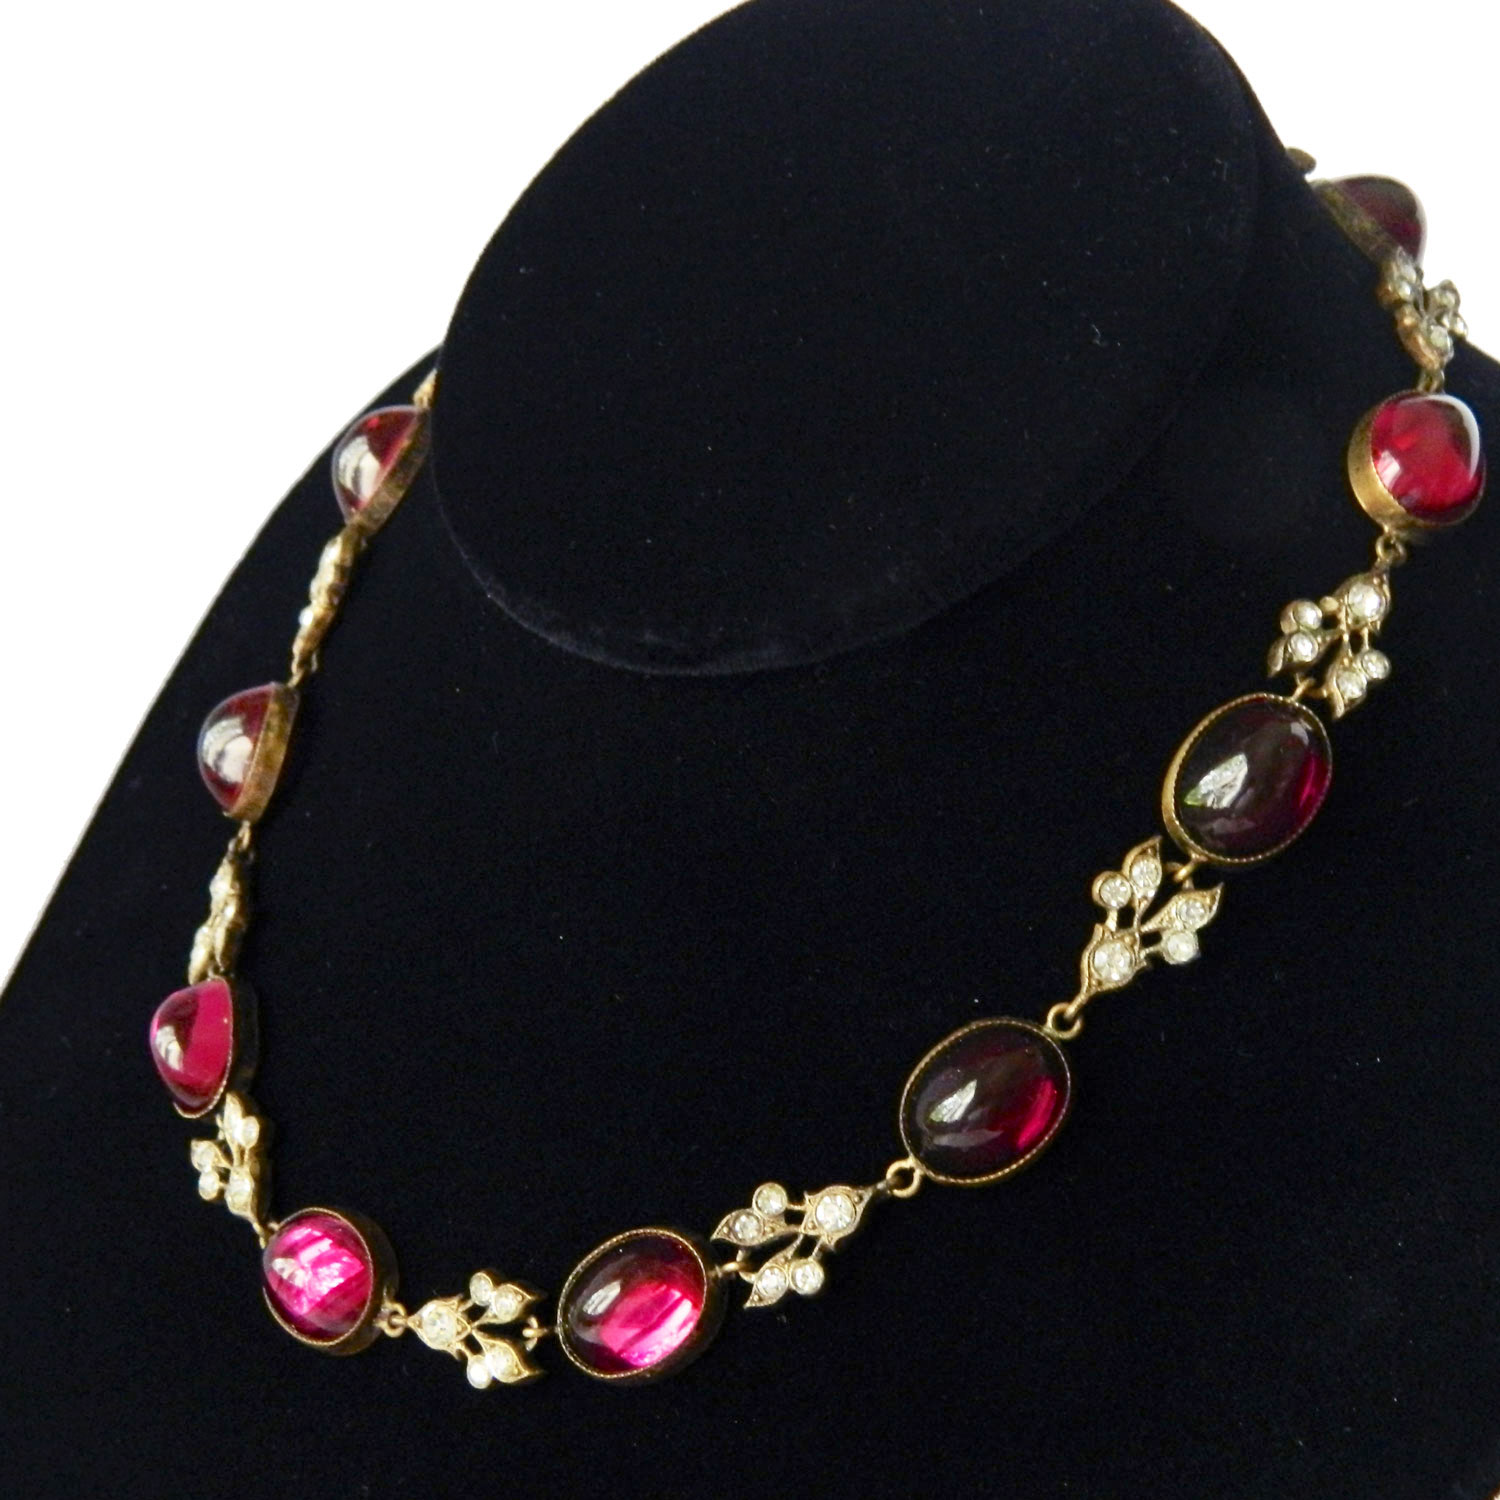 Antique red cabochon necklace